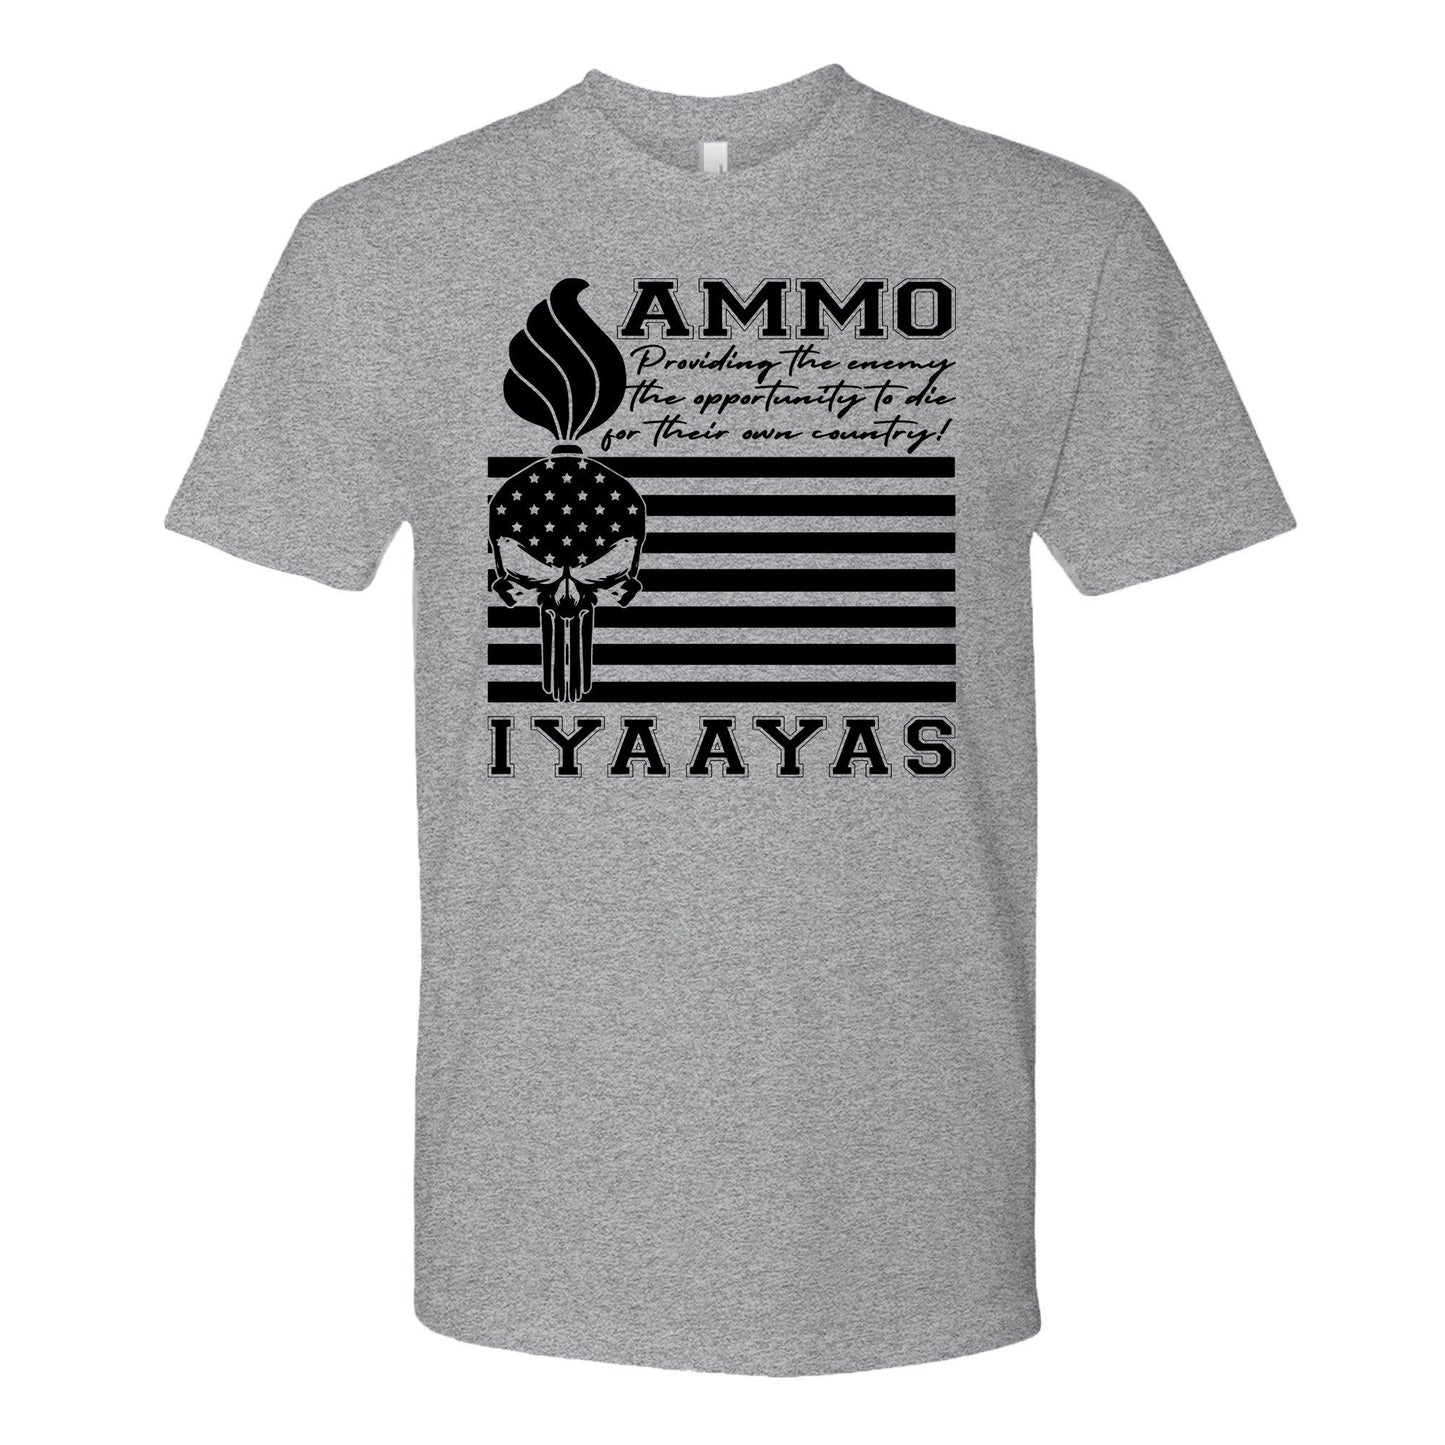 USAF AMMO Punisher Flag Motto IYAAYAS Munitions Heritage Unisex Gift T-Shirt - AMMO Pisspot IYAAYAS Gear